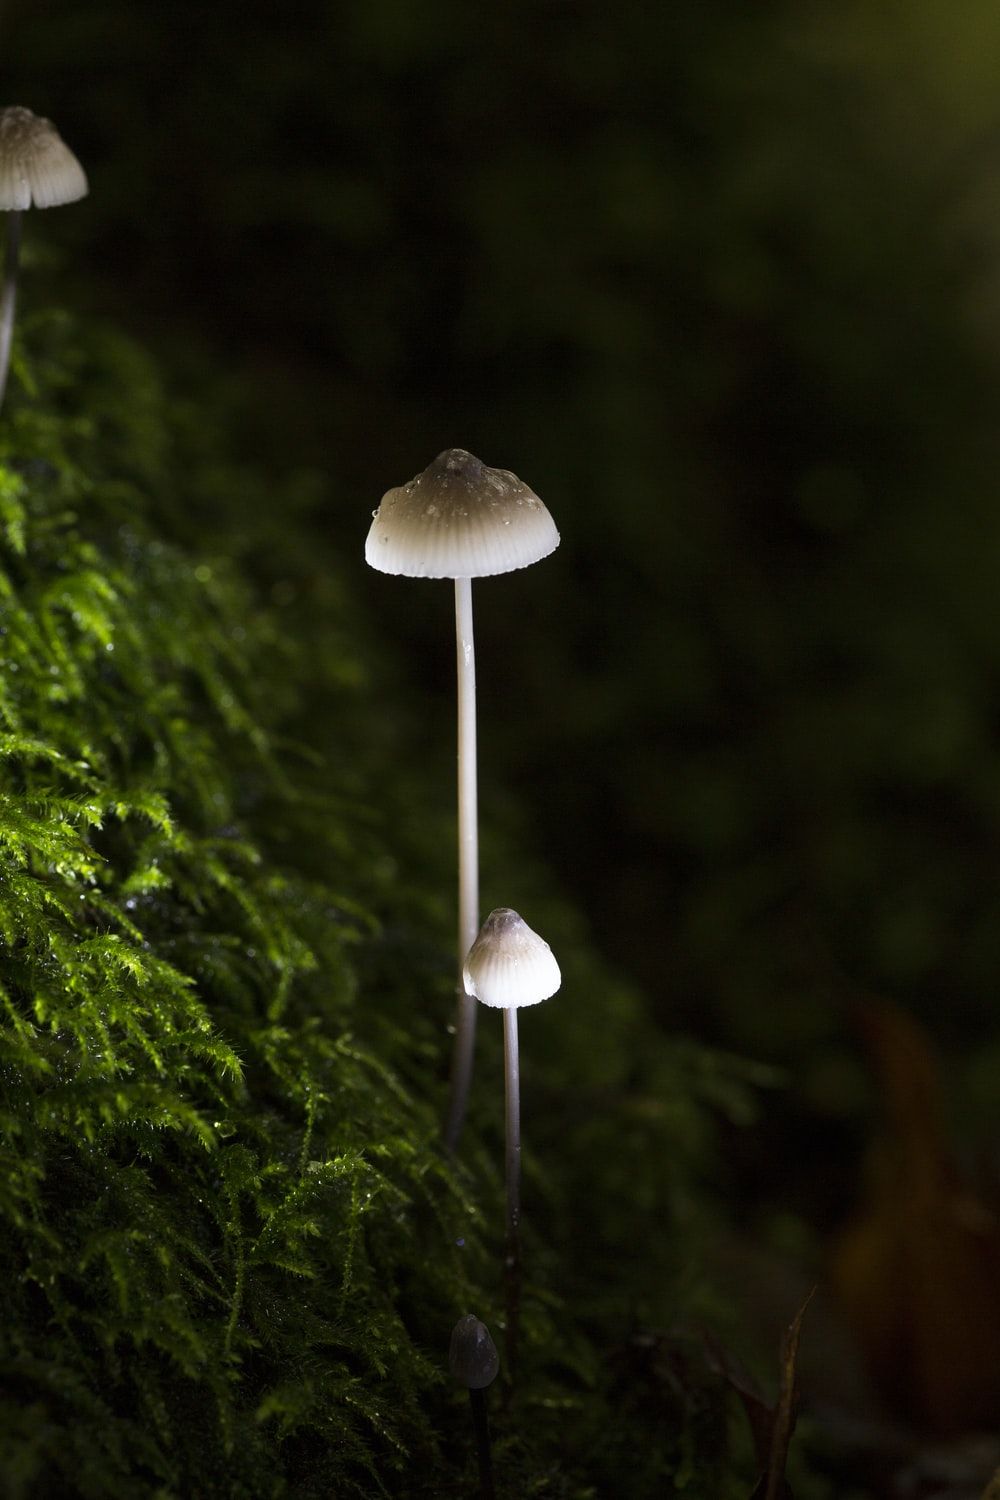 Magic Mushrooms Picture. Download Free Image